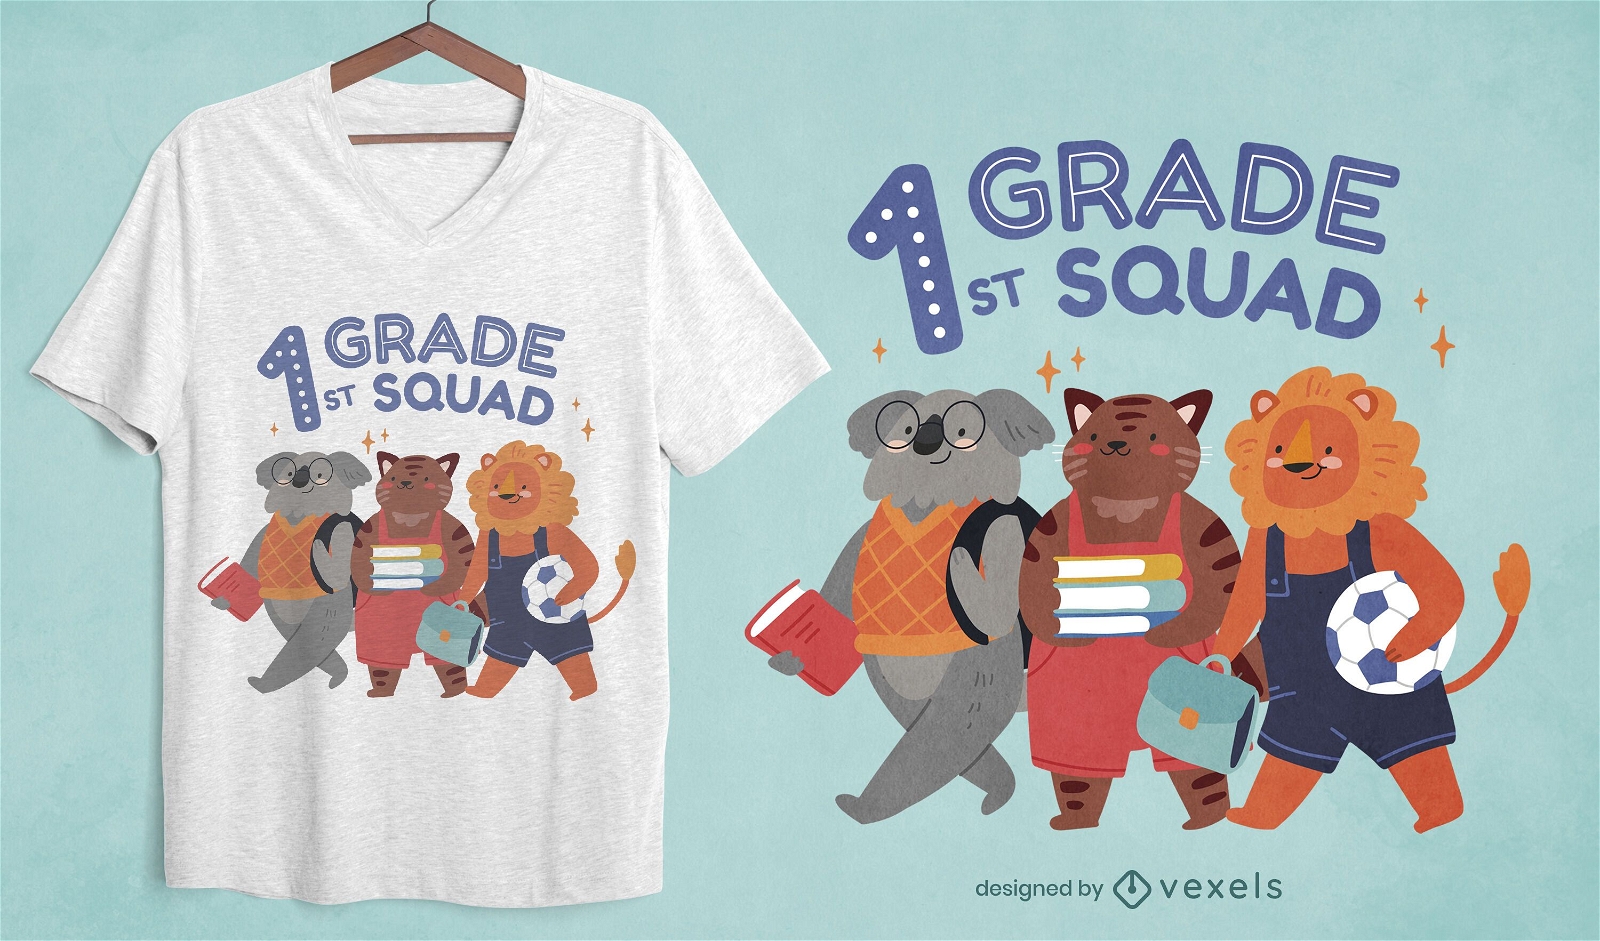 First grade squad t-shirt design